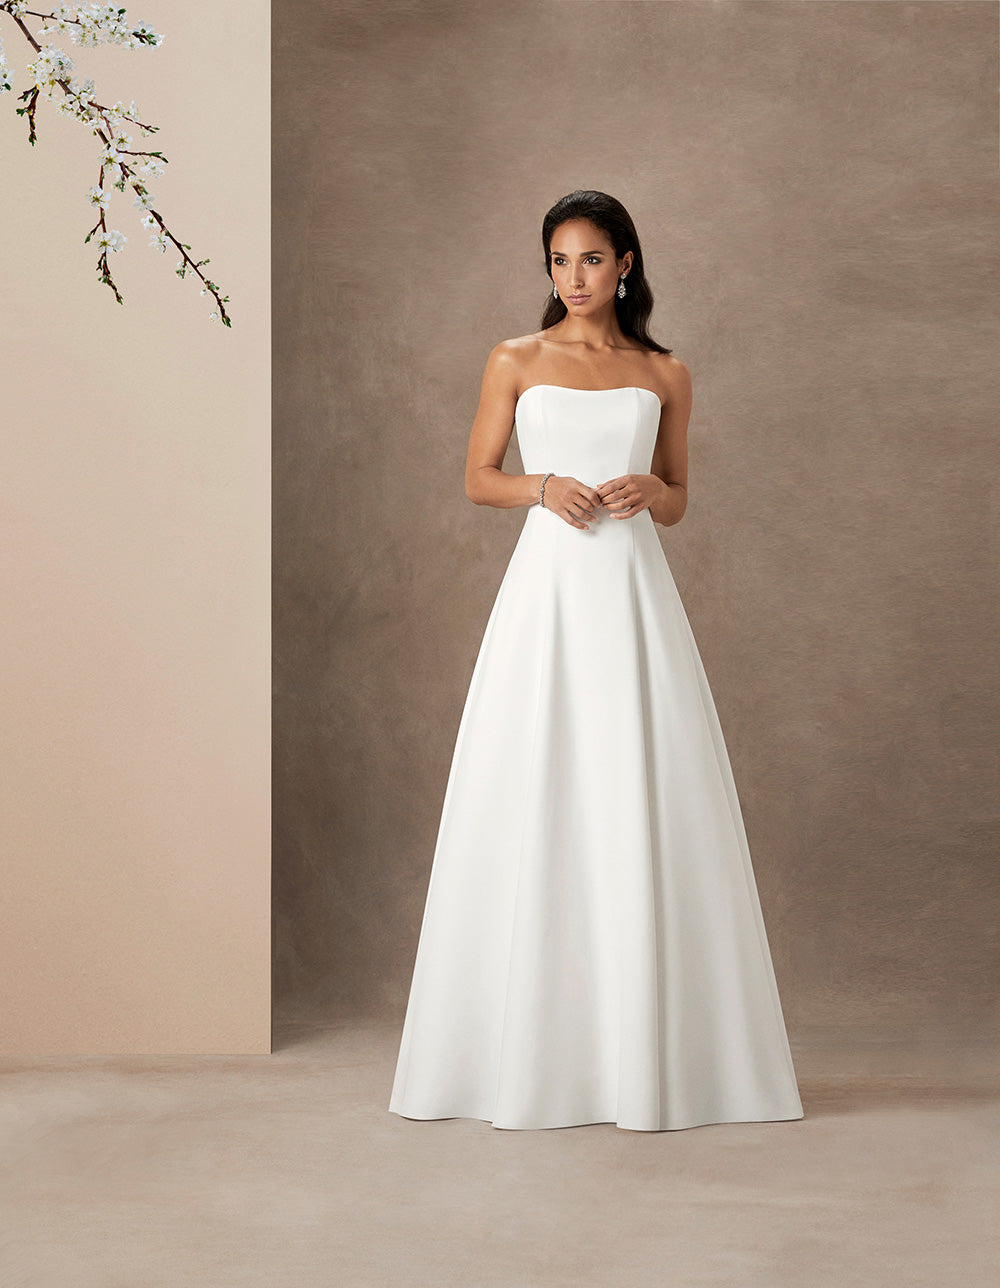 Aspen luxury wedding gown by Caroline Castigliano